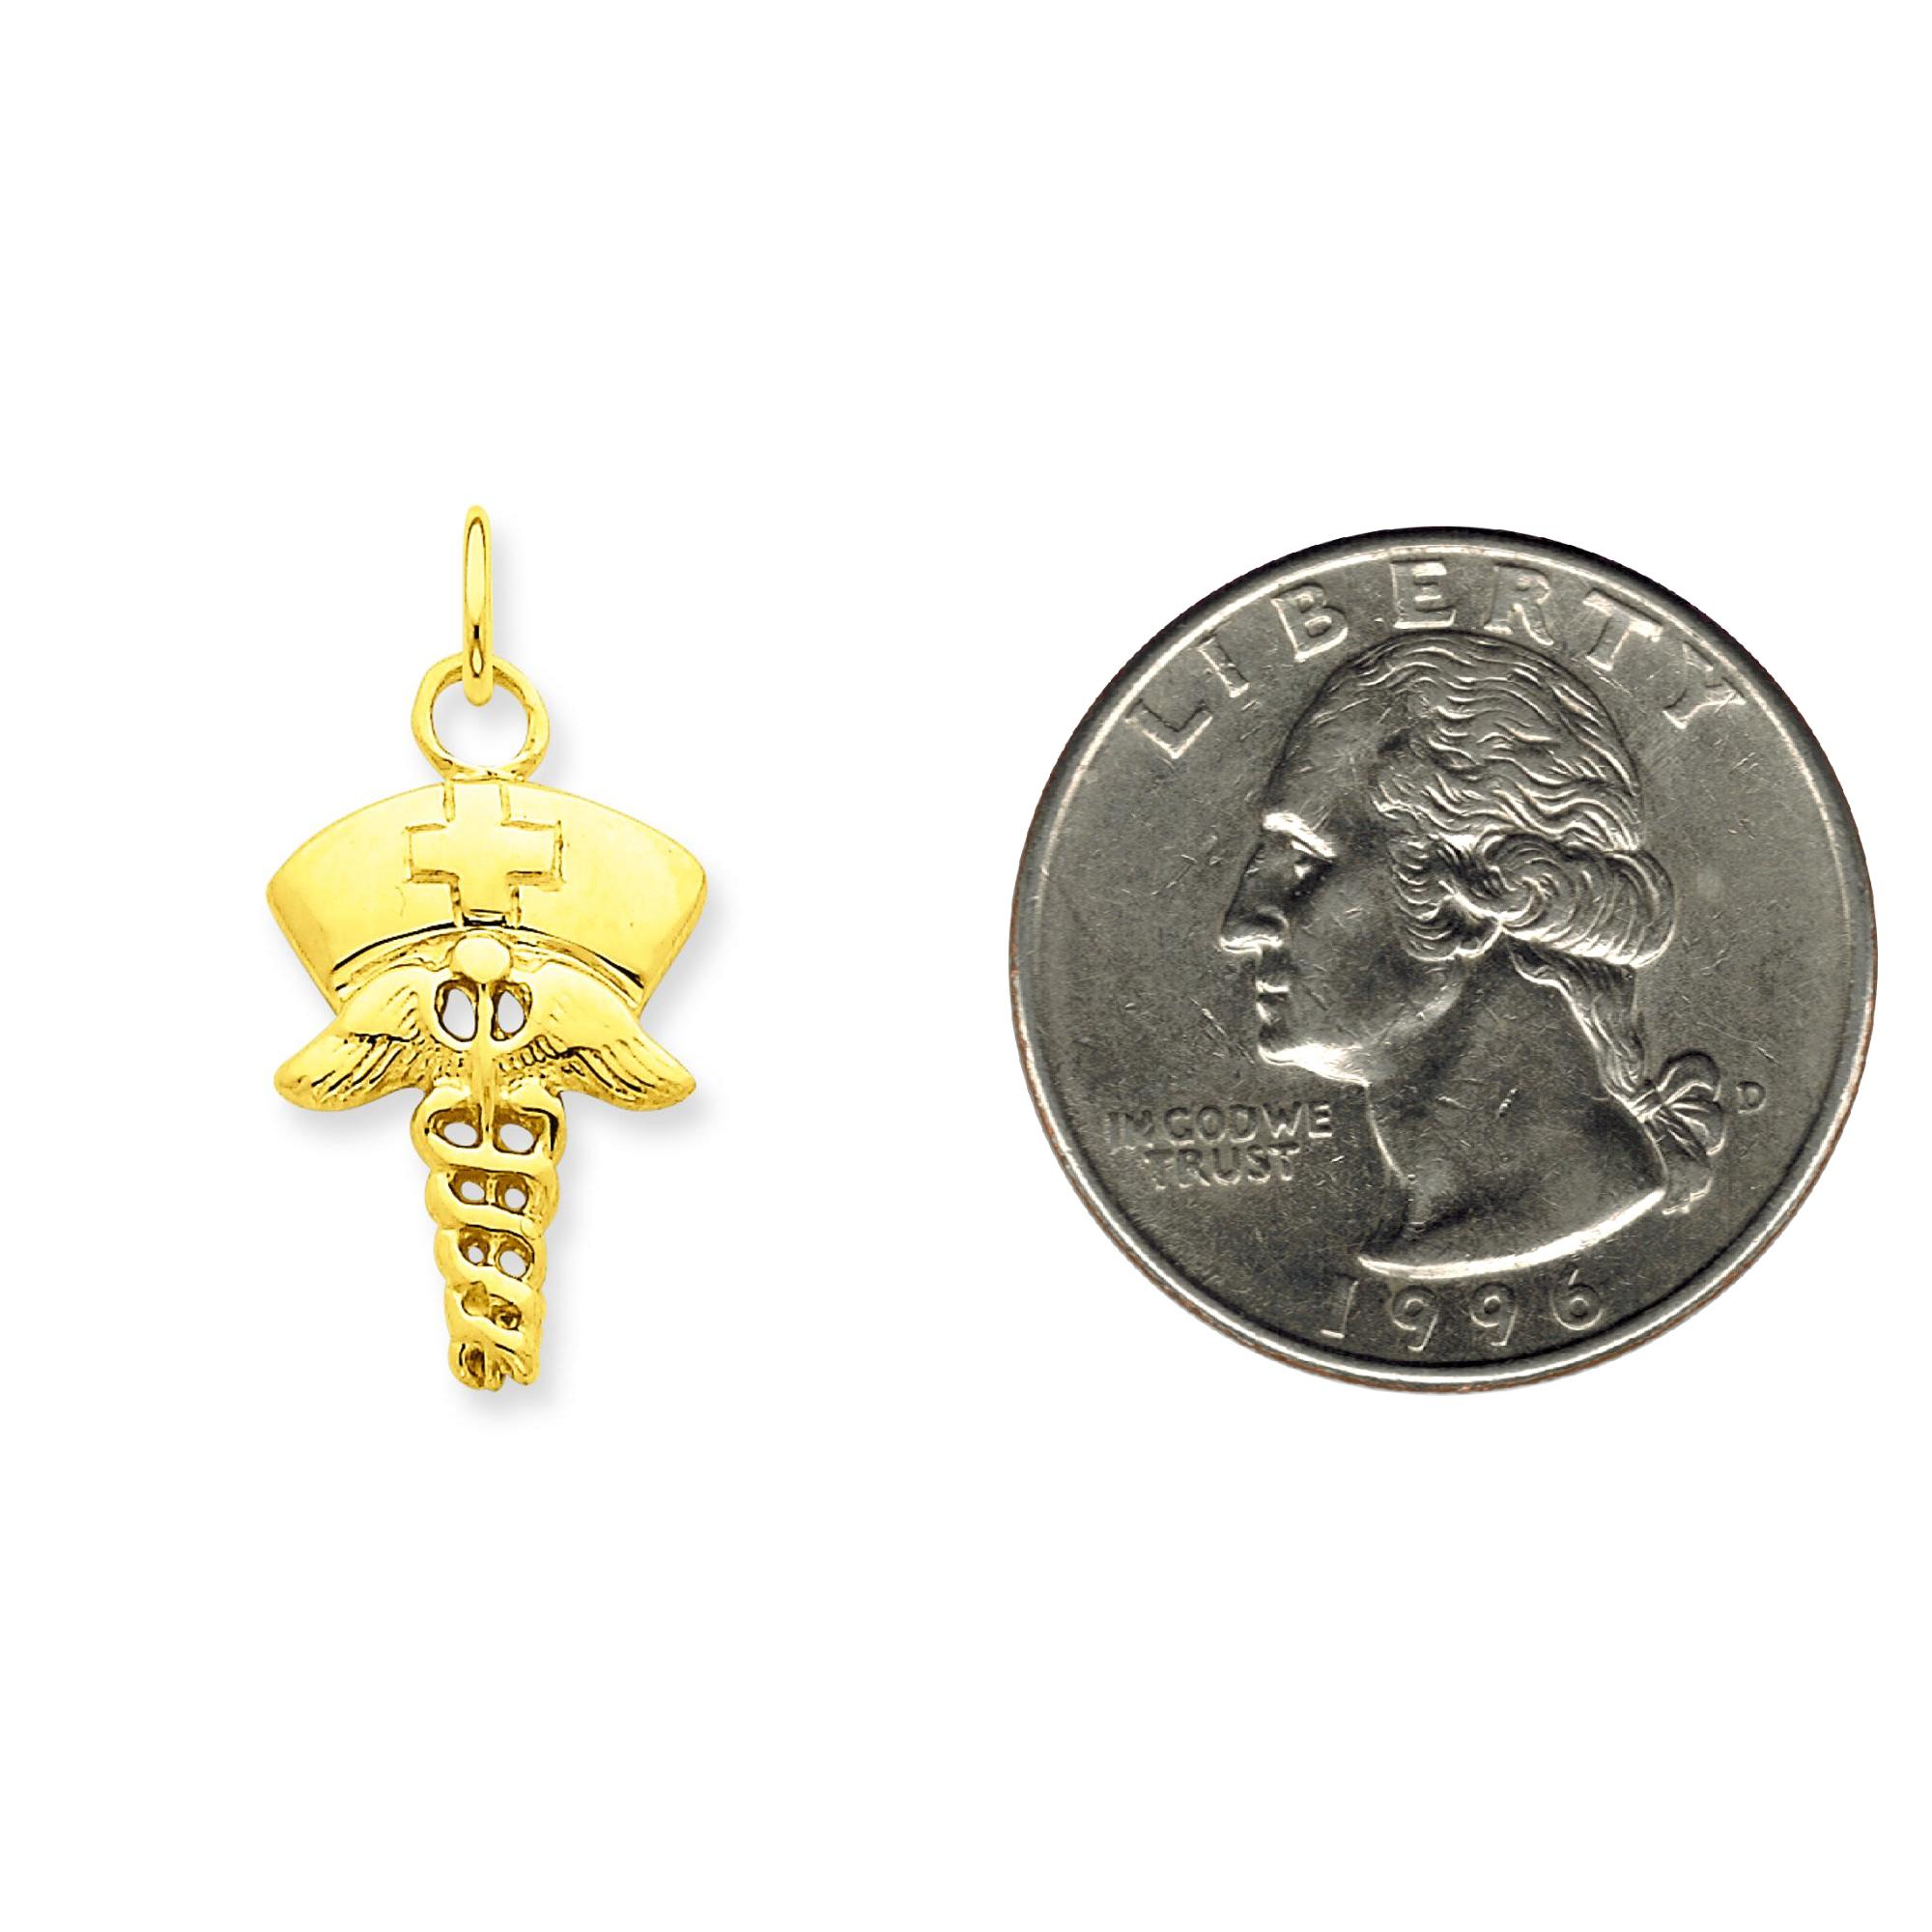 Findingking 14K Yellow Gold Nurse Hat Caduceus Symbol Charm Jewelry